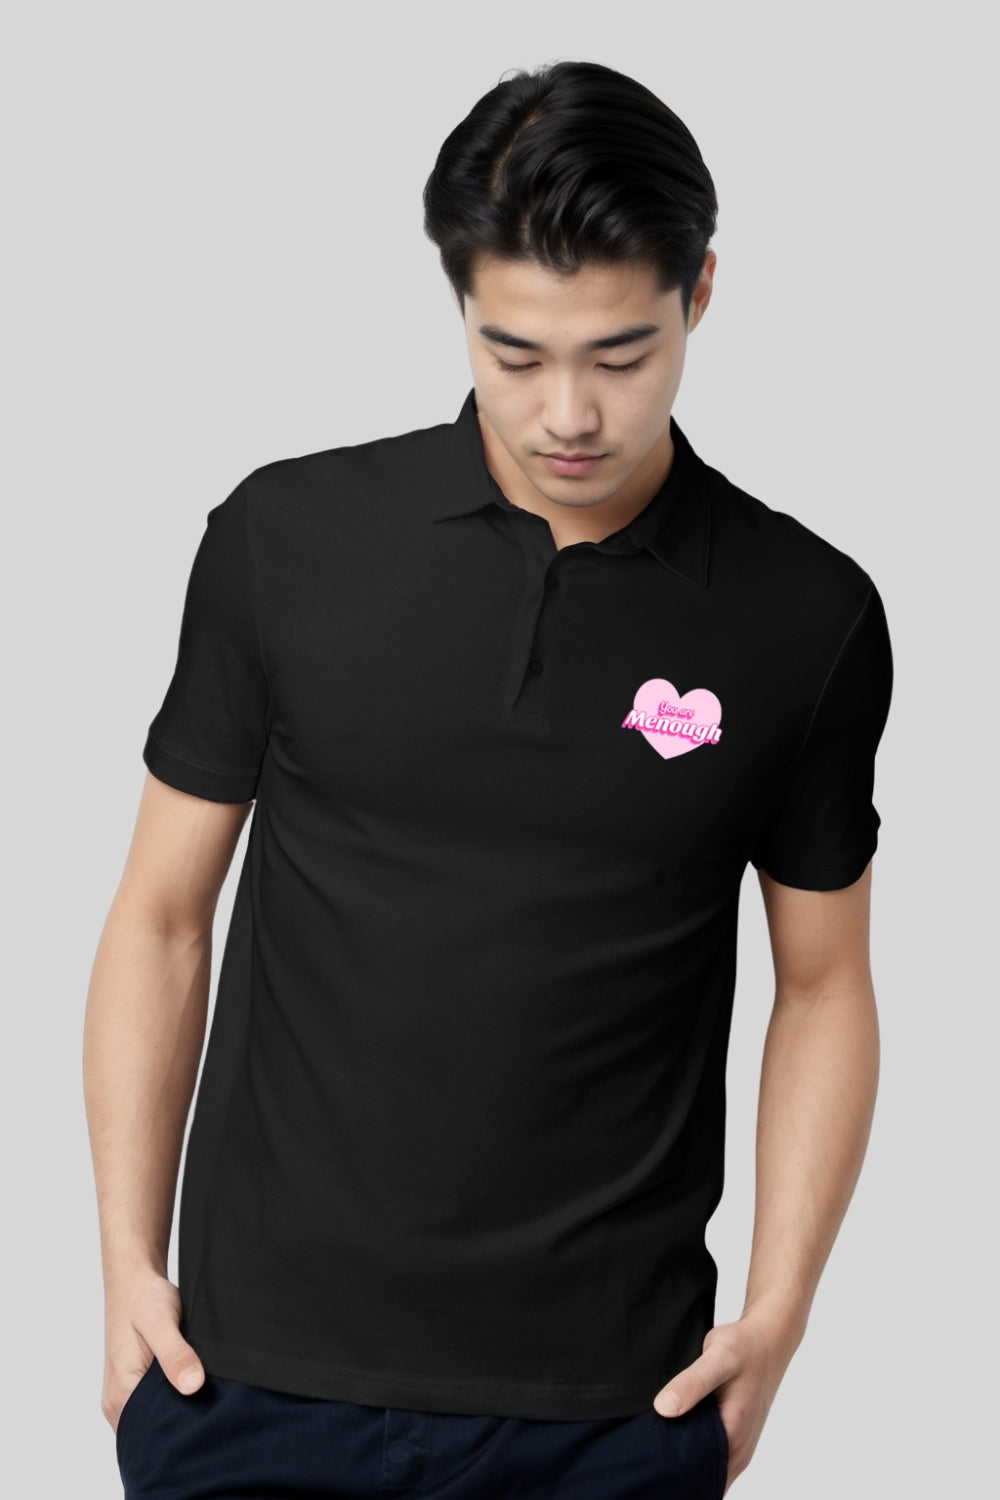 Menough Pocket Printed Black Polo Shirt